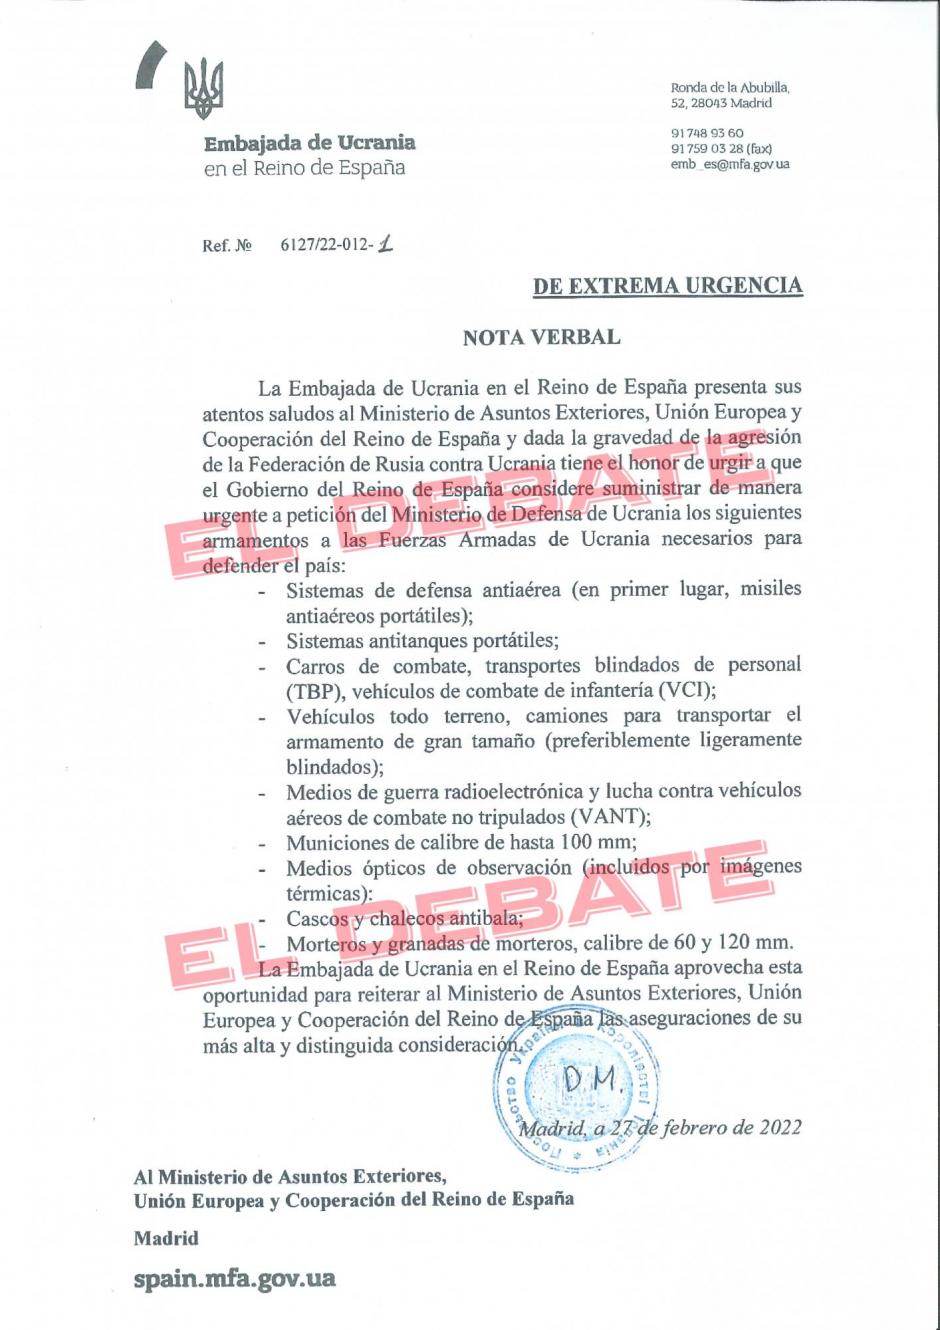 Documento oficial de la Embajada de Ucrania